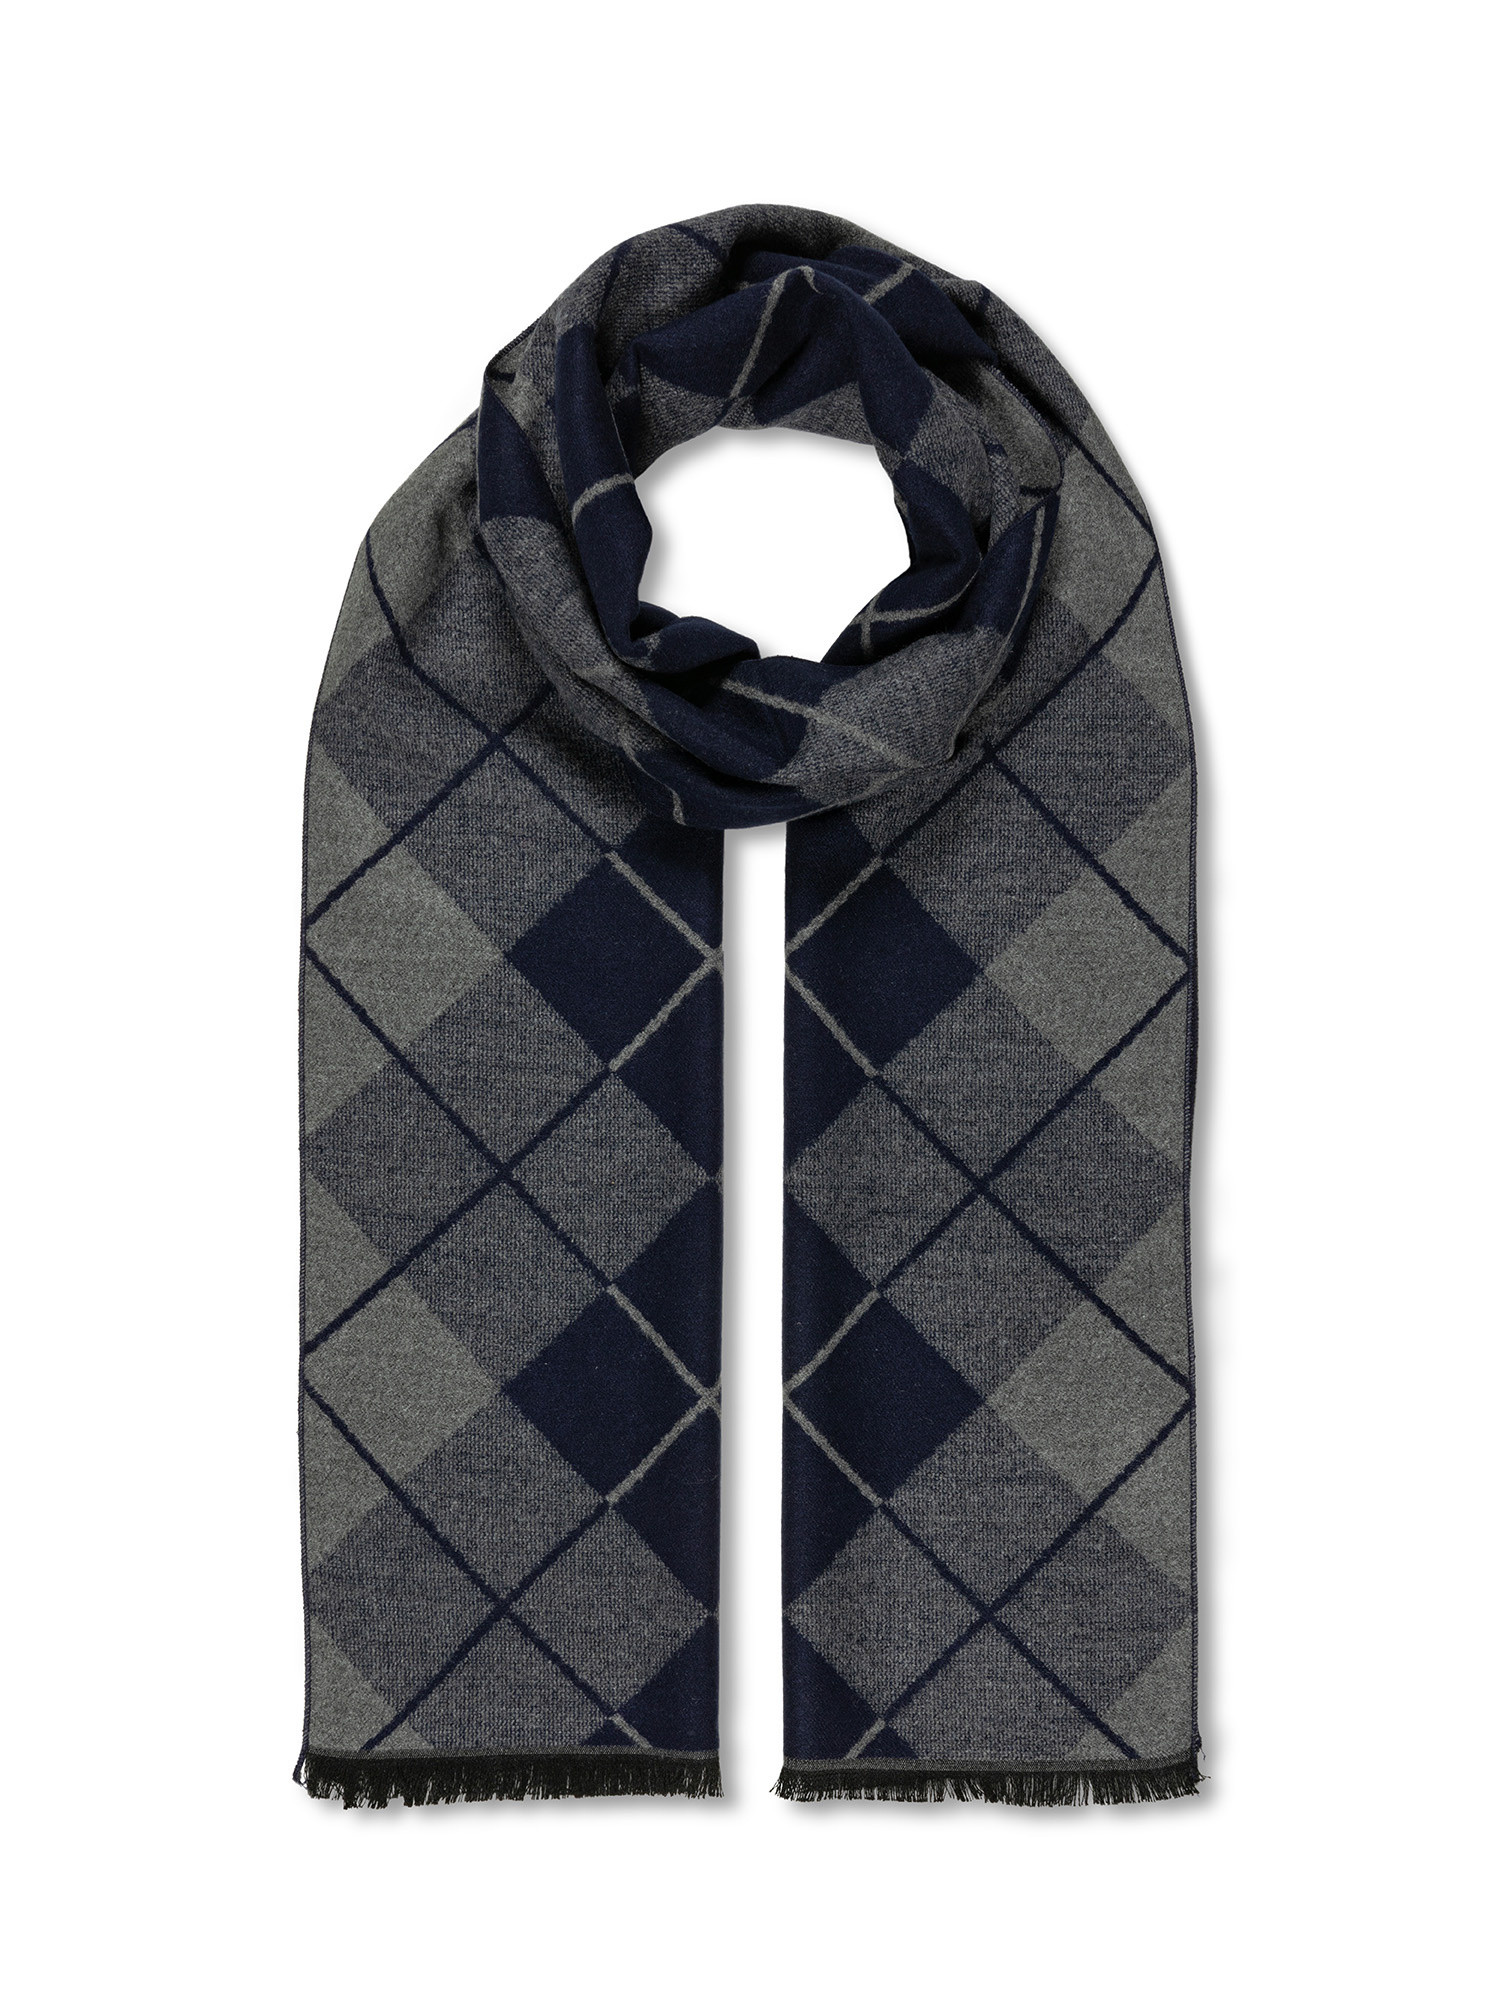 Luca D'Altieri - Diamond-patterned scarf, Blue, large image number 0